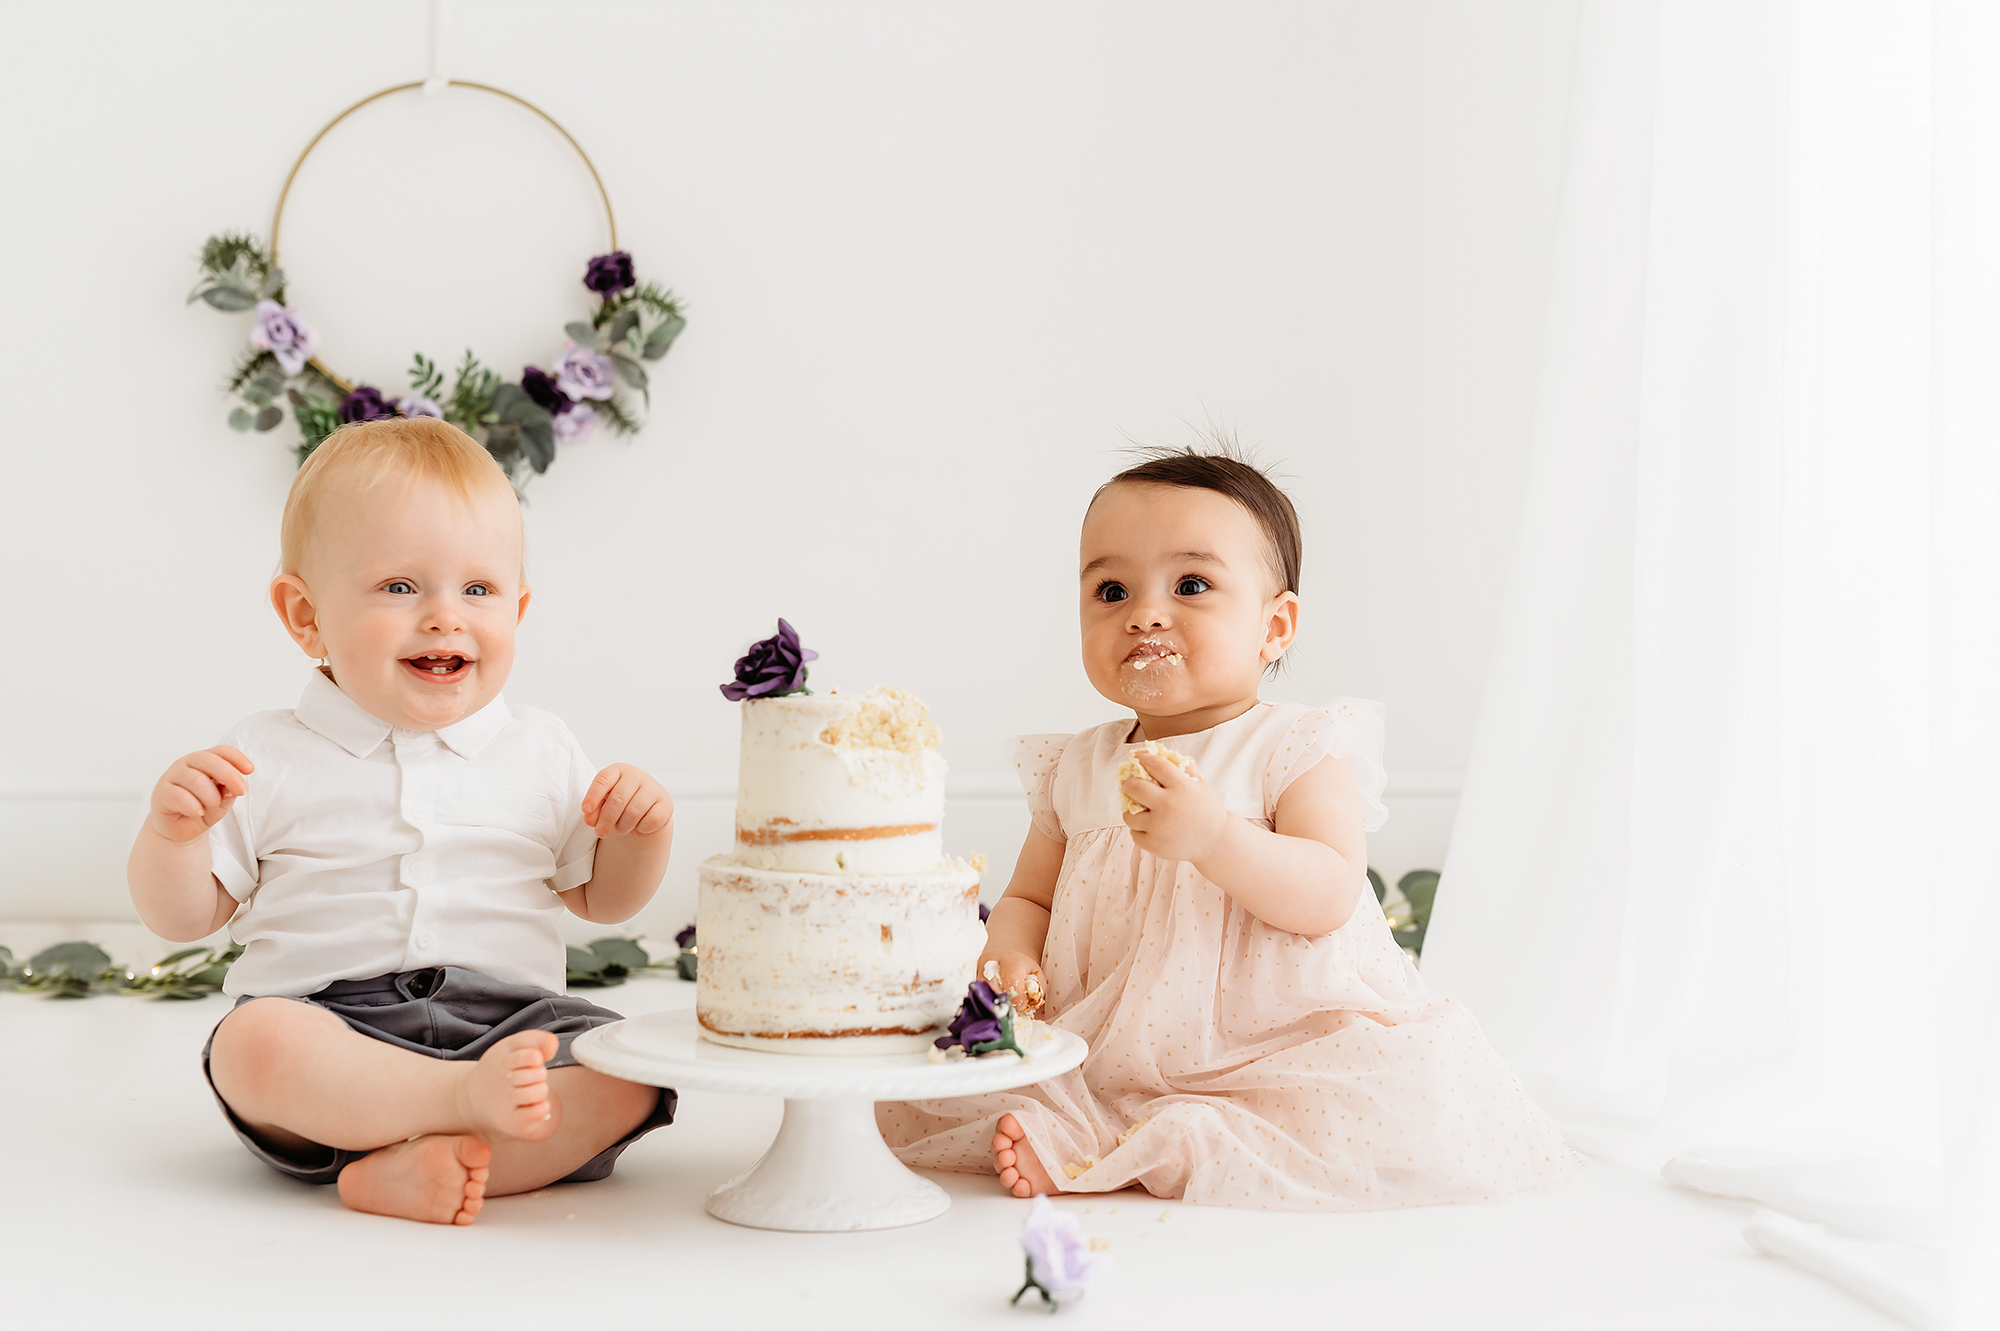 photoshoot with mamas & papas - both babies eating cake